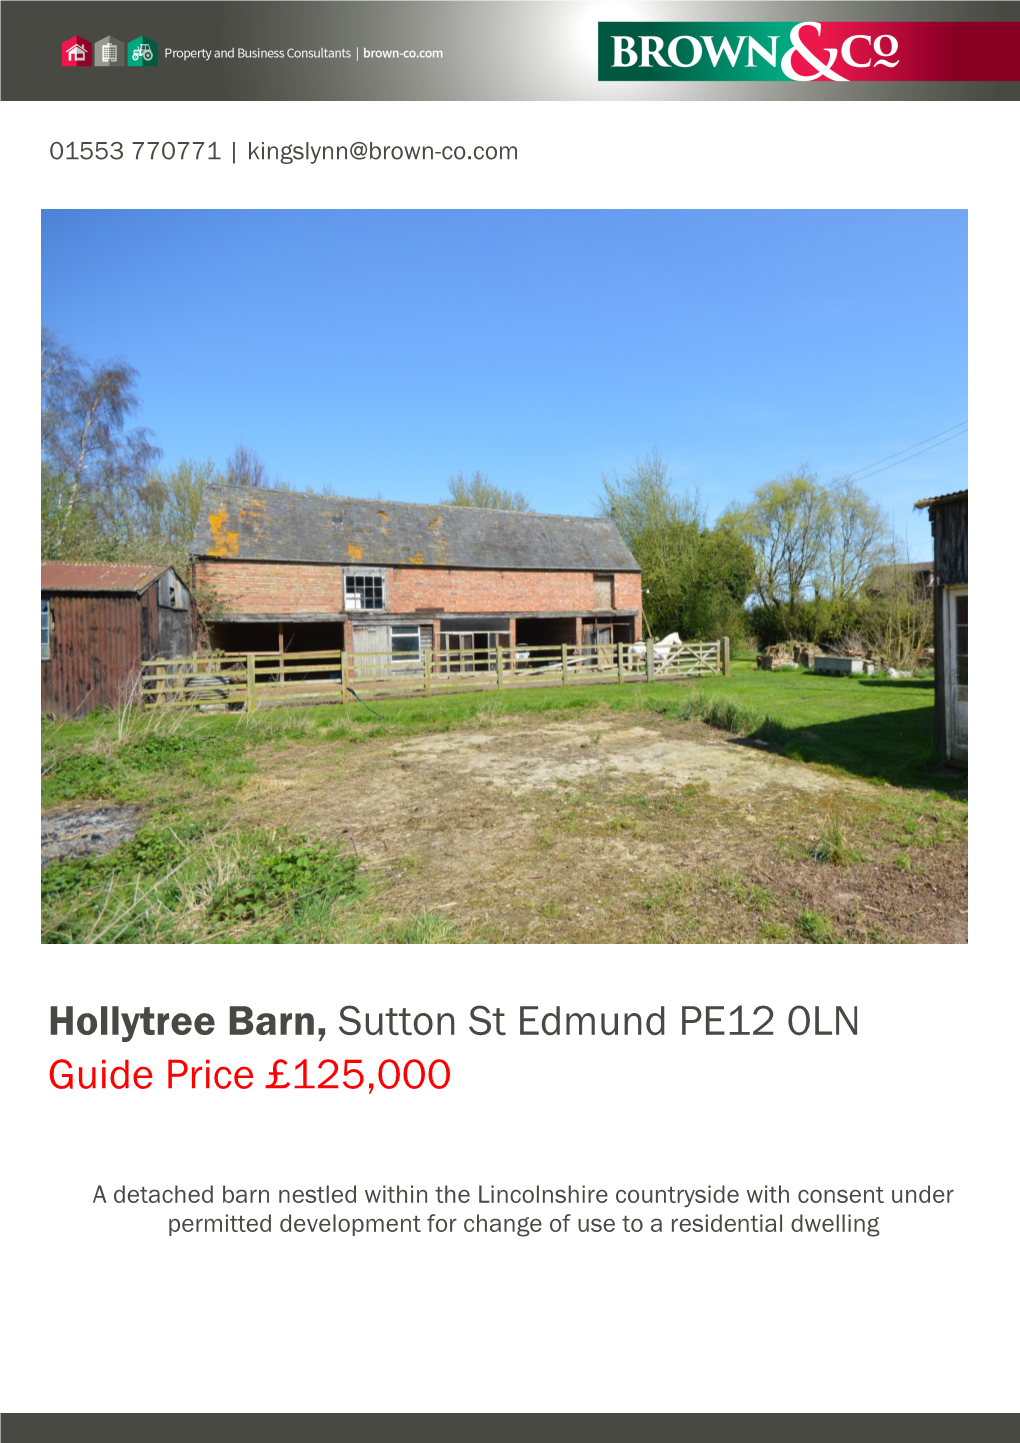 Hollytree Barn, Sutton St Edmund PE12 0LN Guide Price £125,000